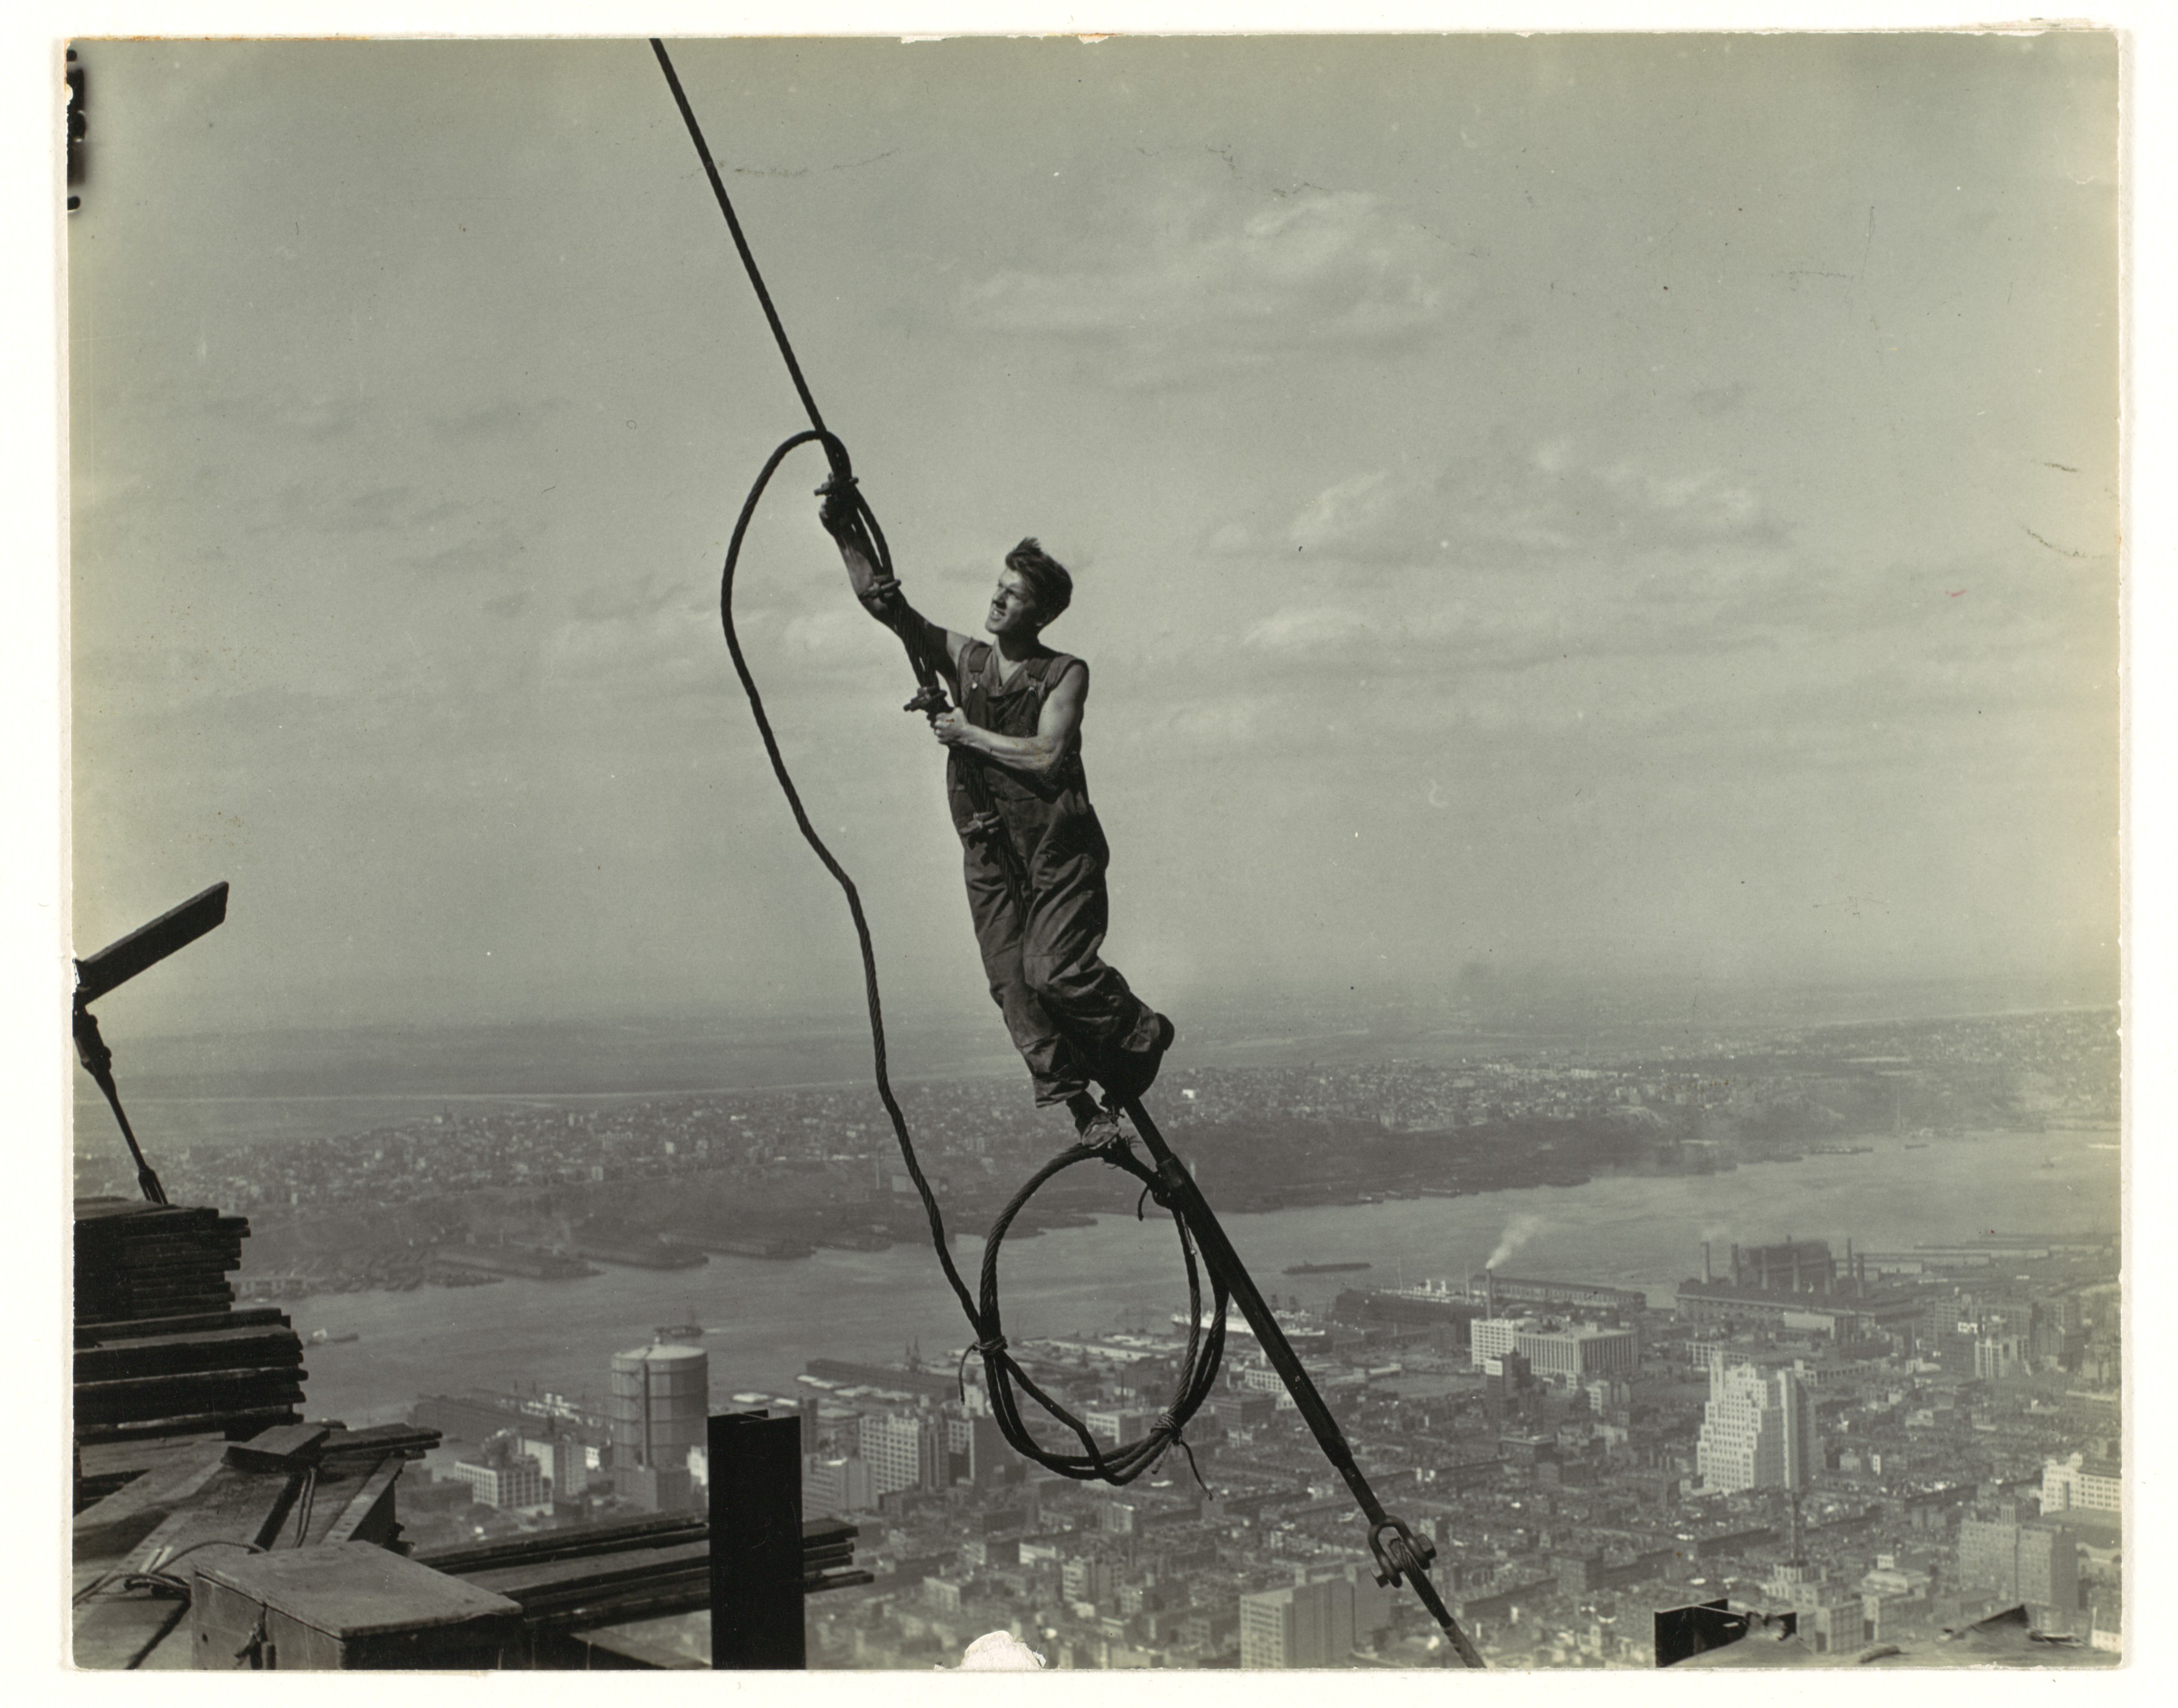 HINE (1930) - Icarus, Empire State Building